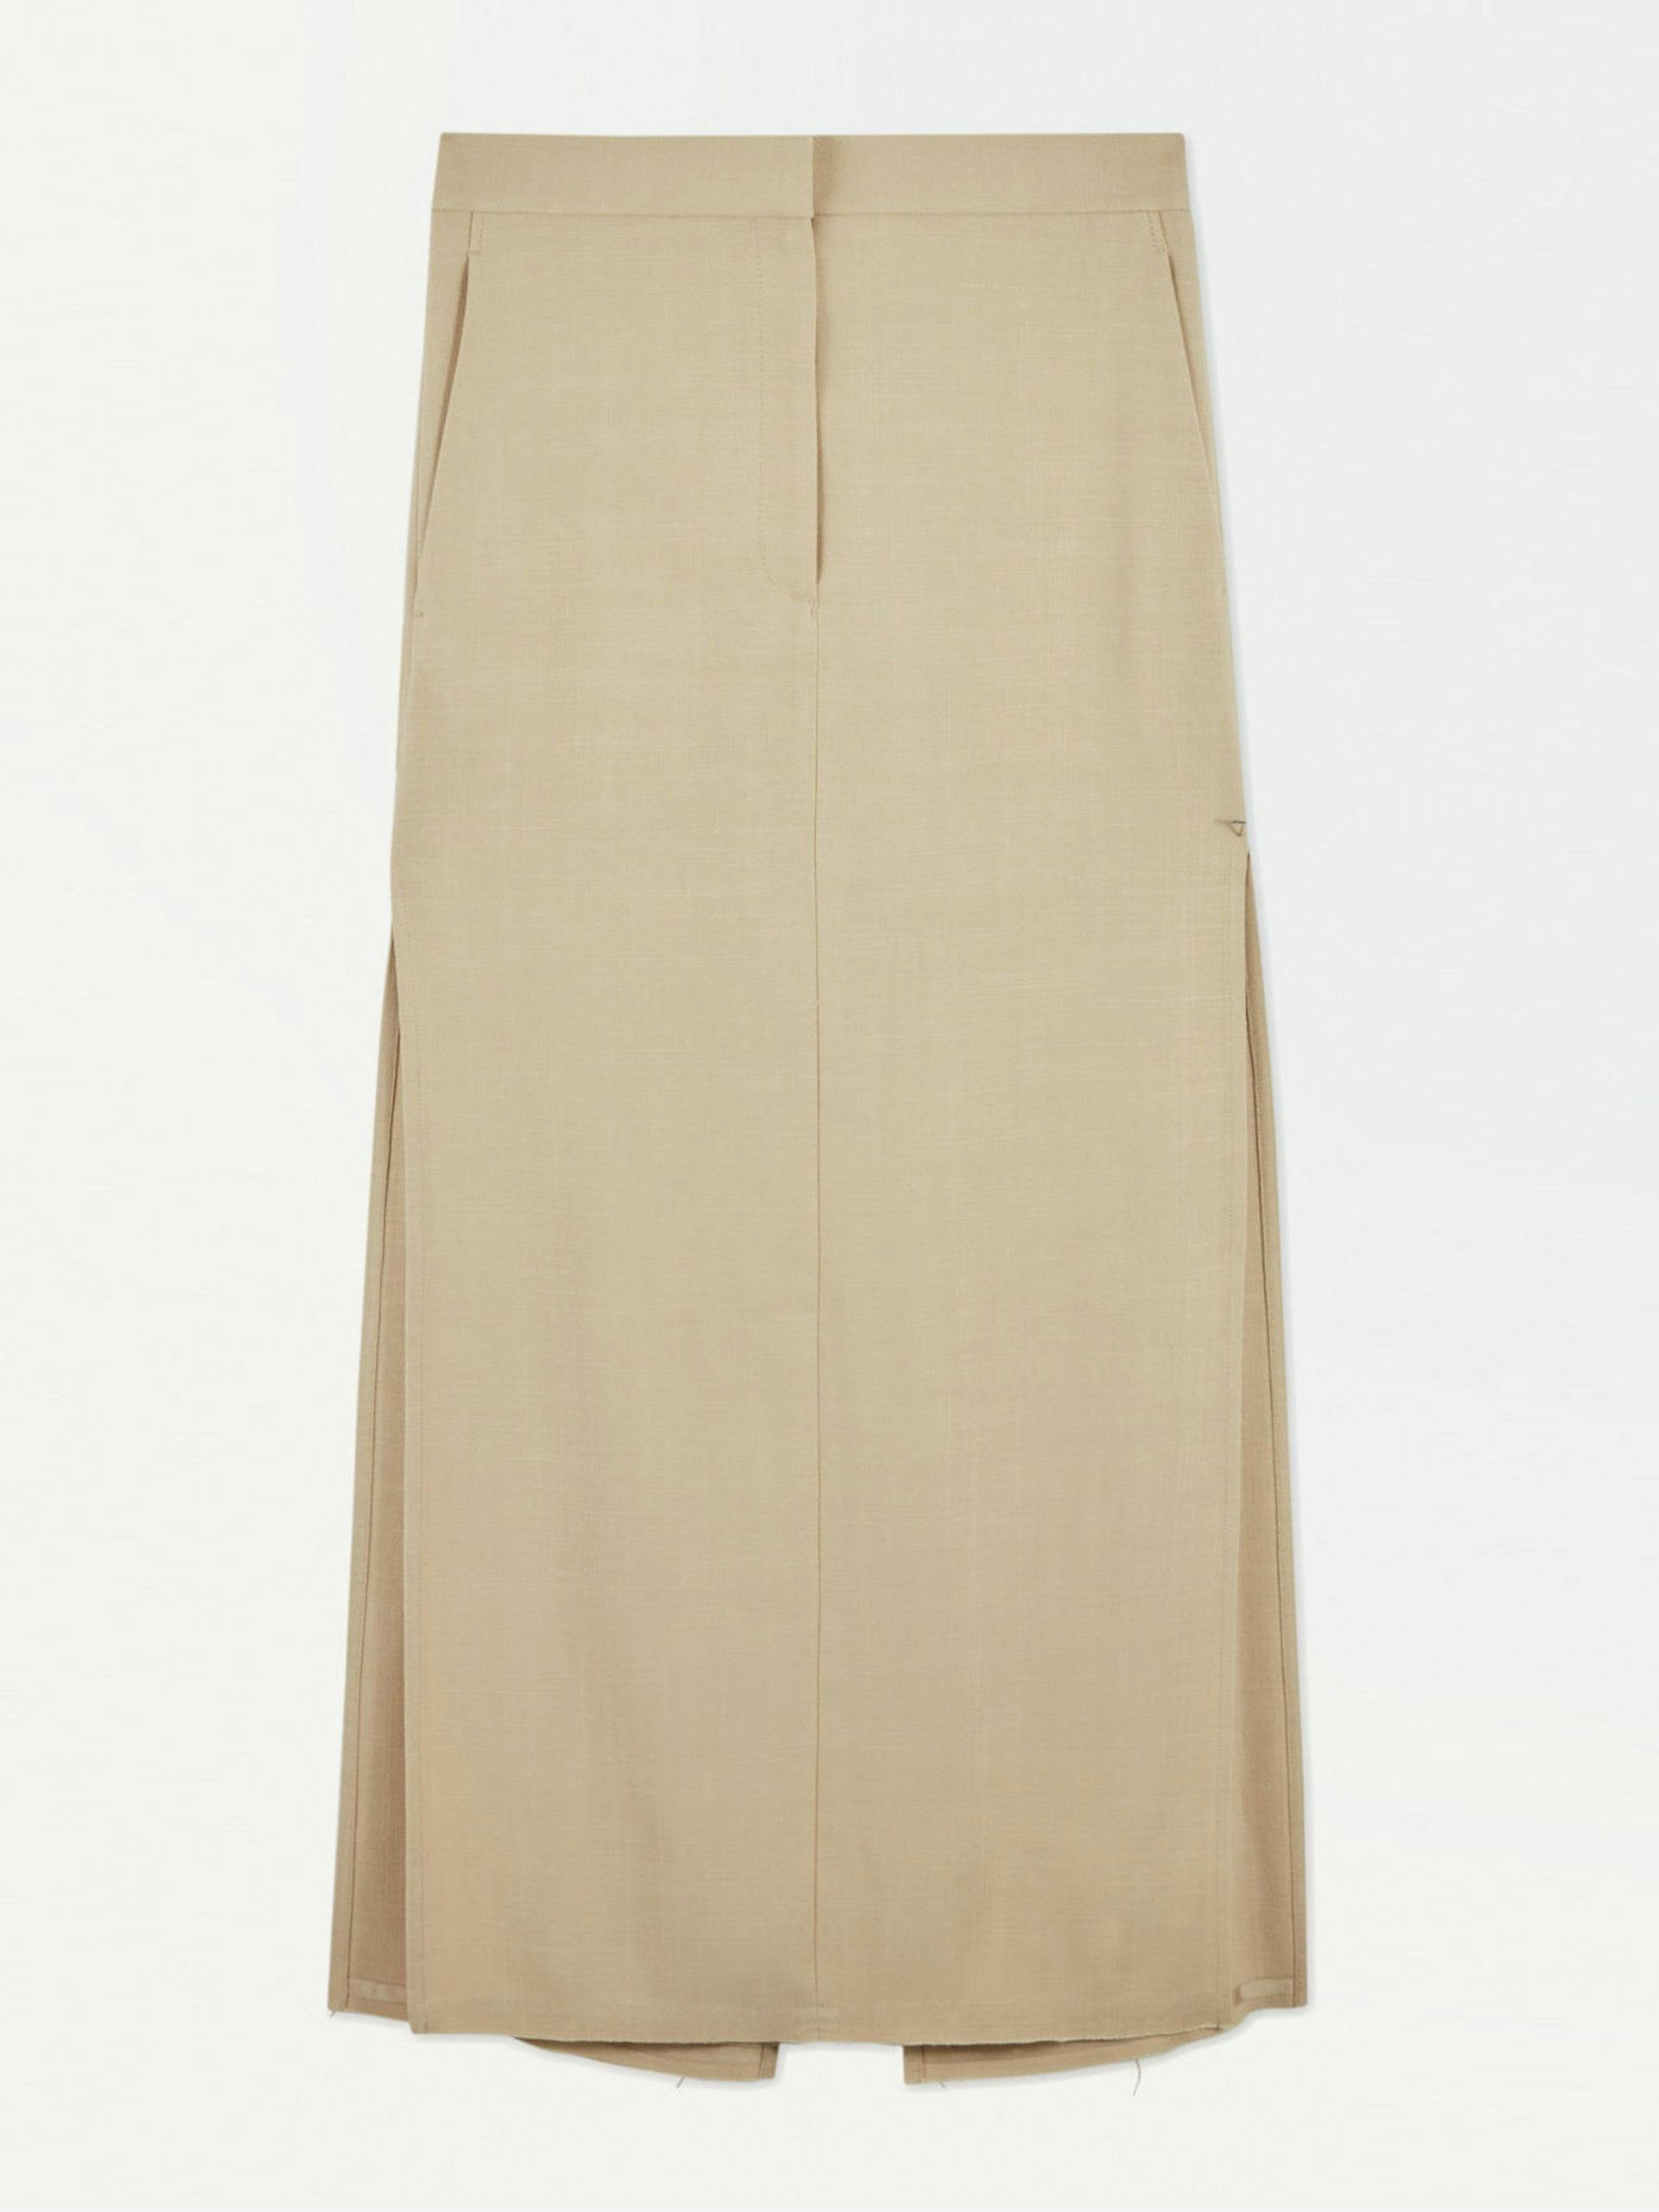 High-slit maxi pencil skirt in beige